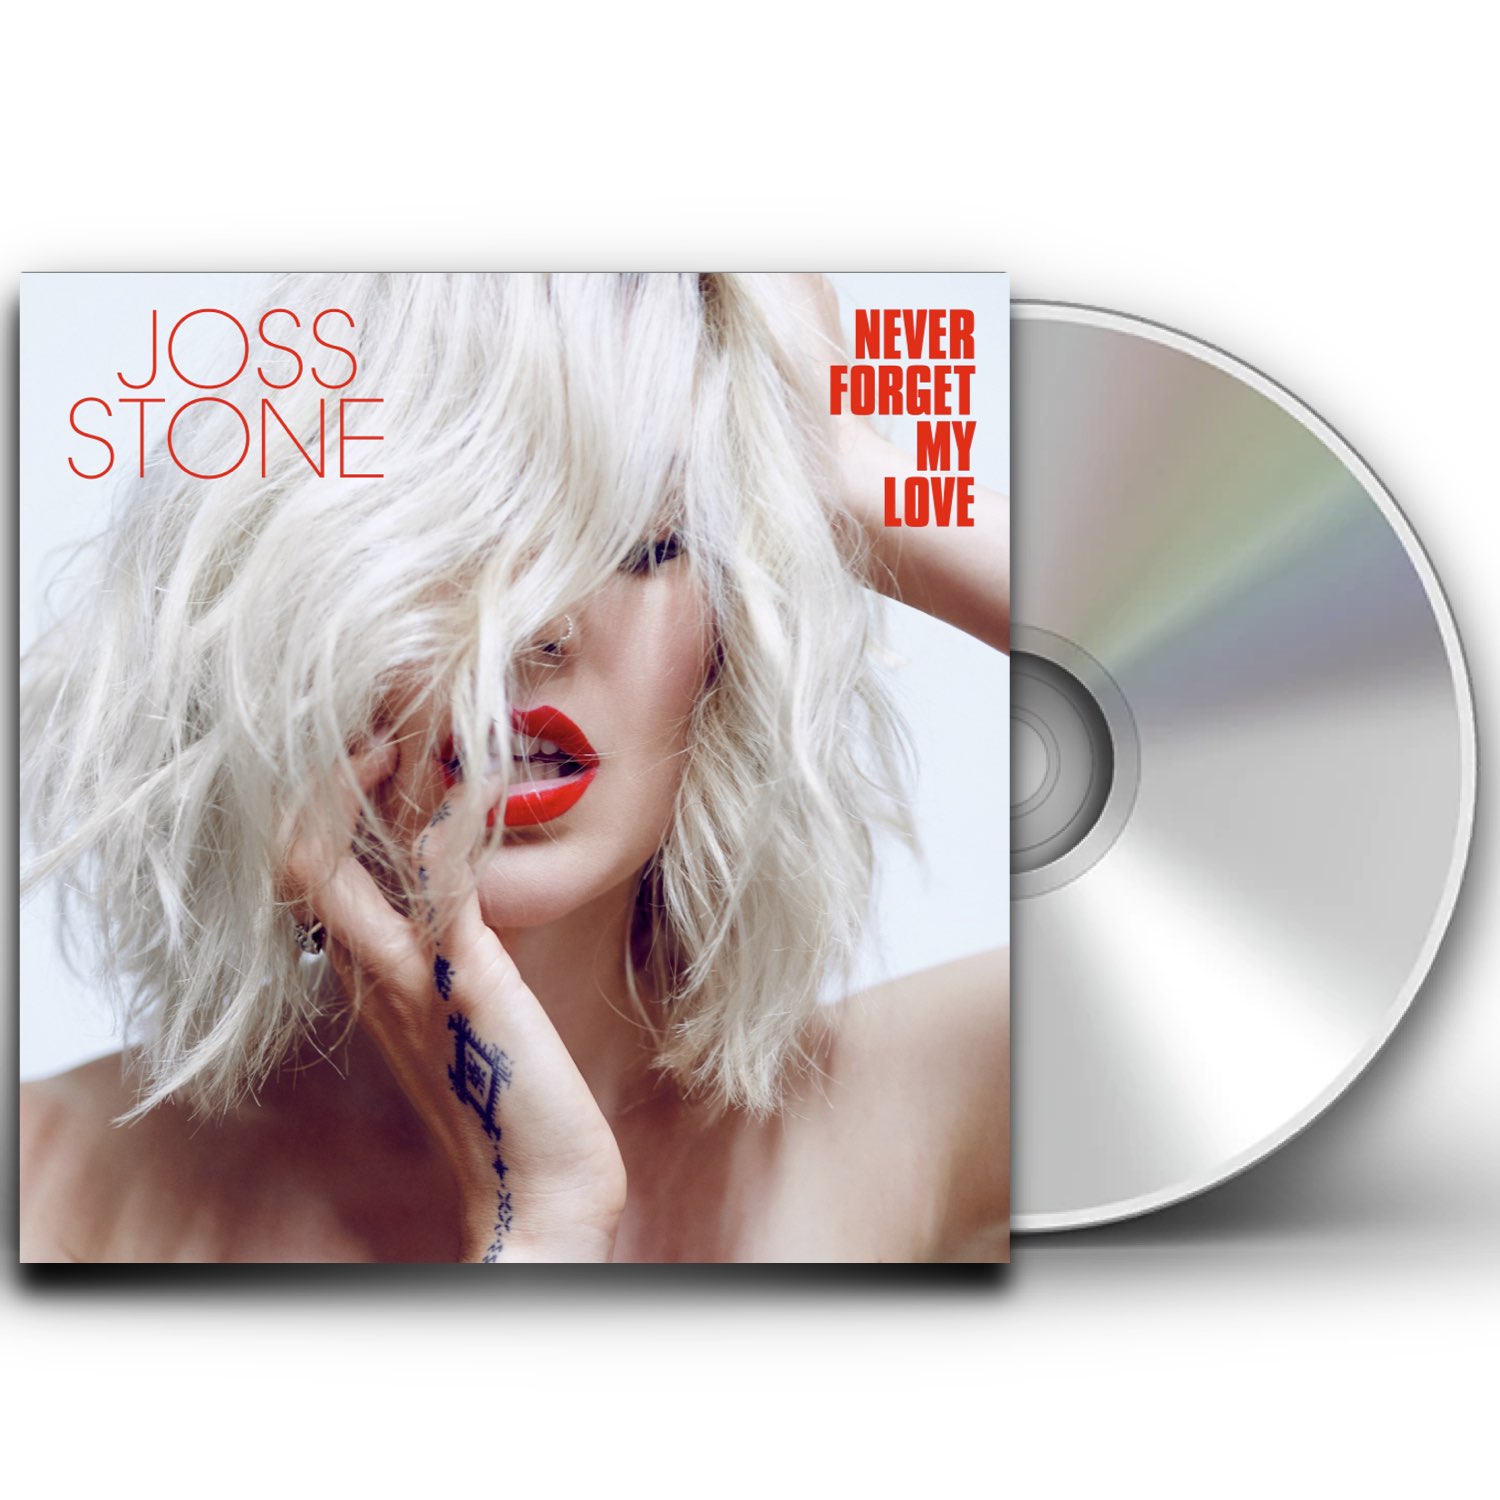 Joss Stone - Never Forget My Love [Standard CD]